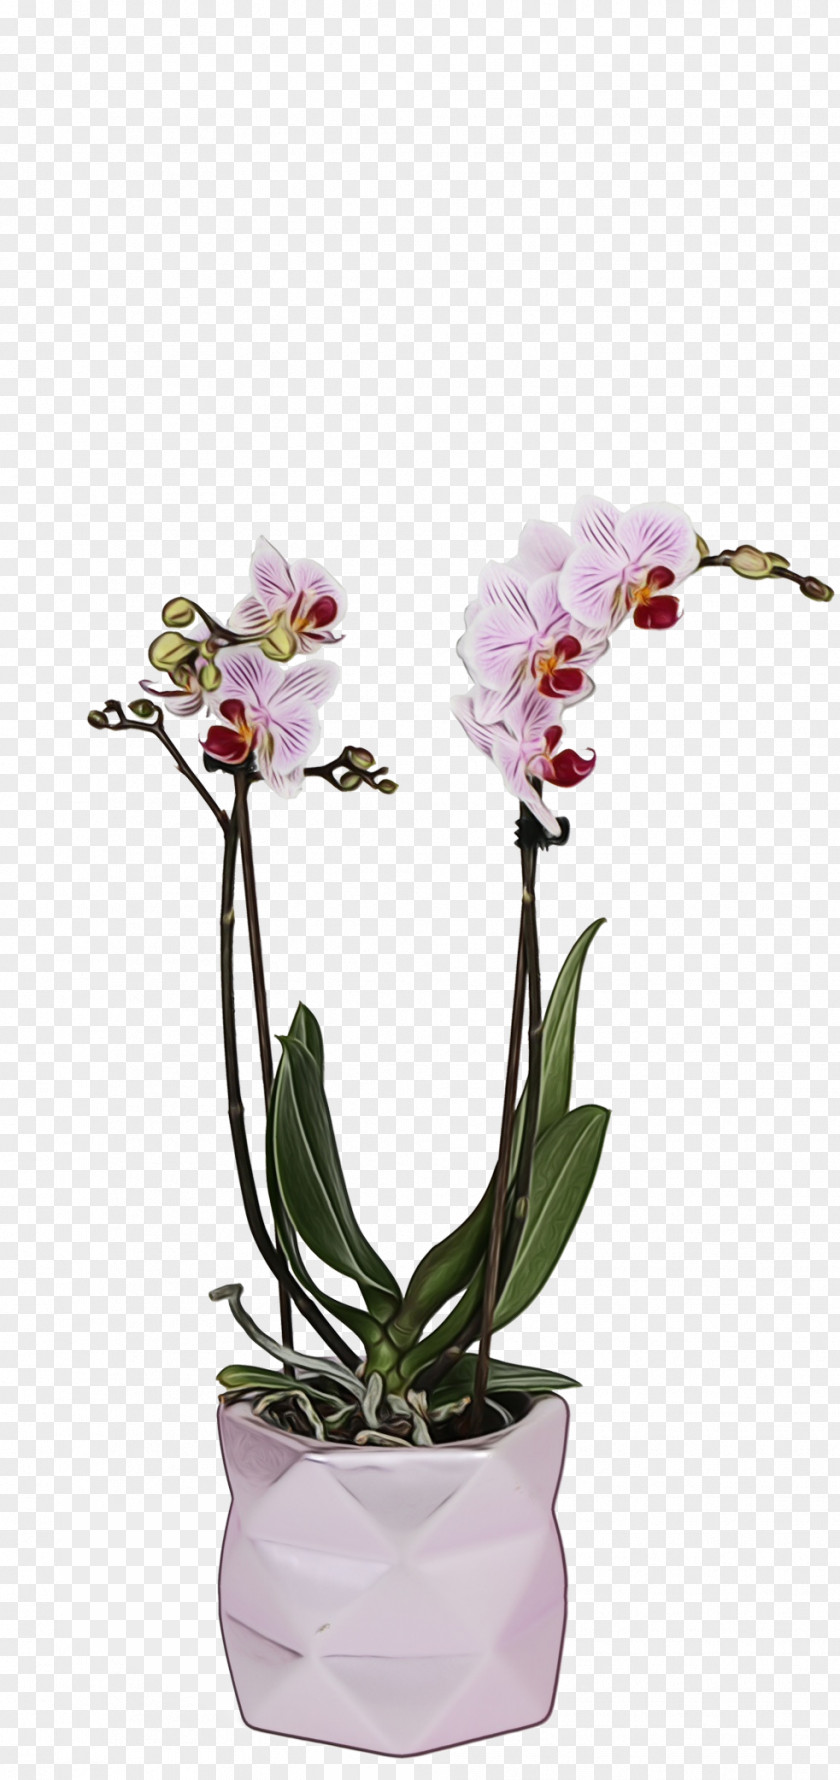 Cattleya Houseplant Watercolor Flower Background PNG